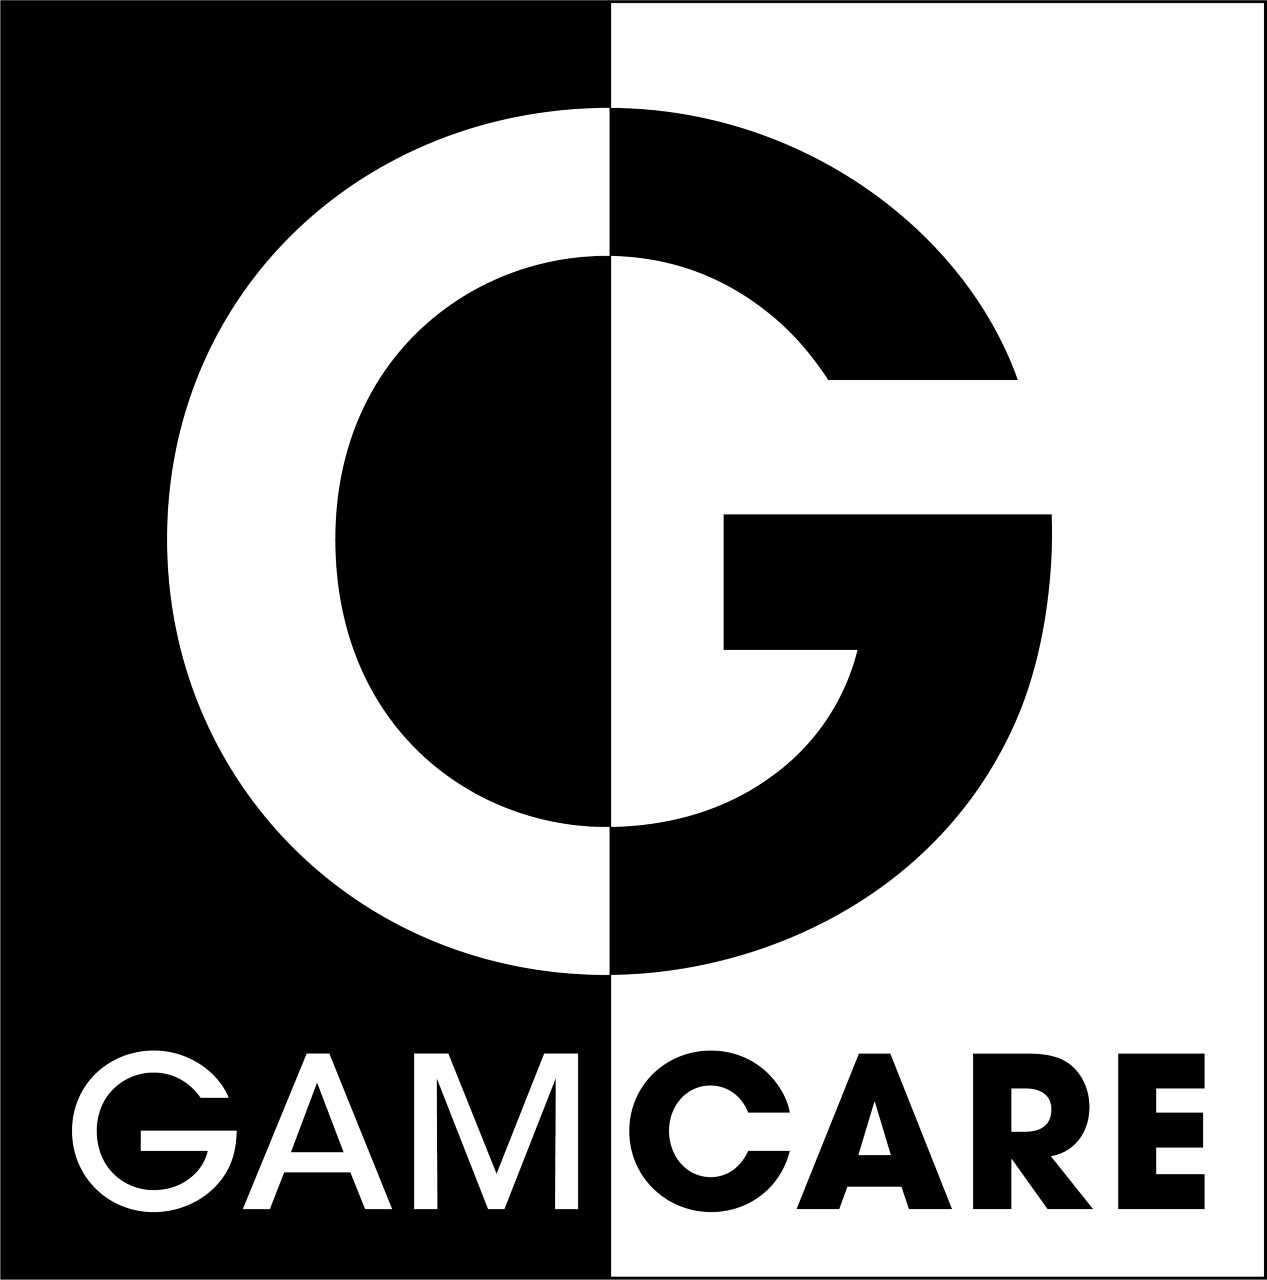 Help Service Logo - GamCare UK's national organisation for gambling problem help